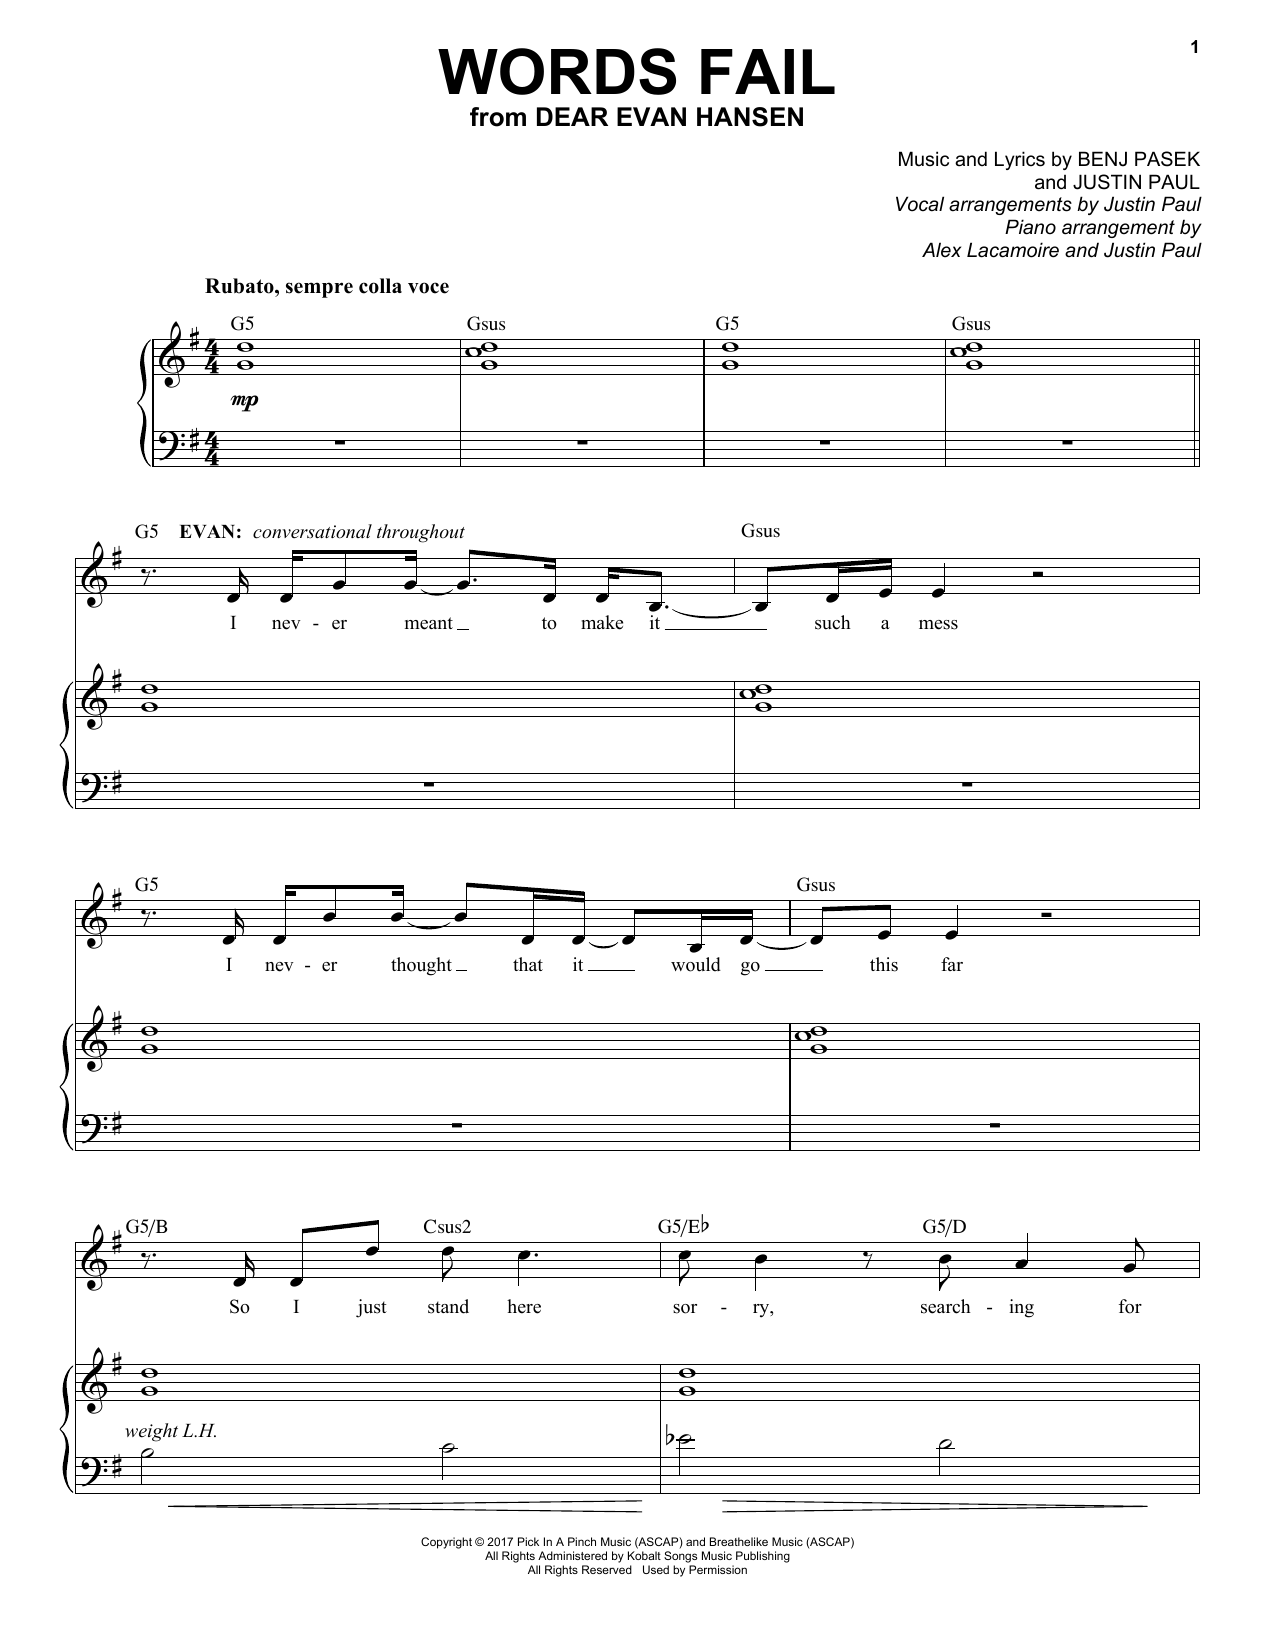 Pasek & Paul Words Fail (from Dear Evan Hansen) Sheet Music Notes & Chords for UKEDEH - Download or Print PDF